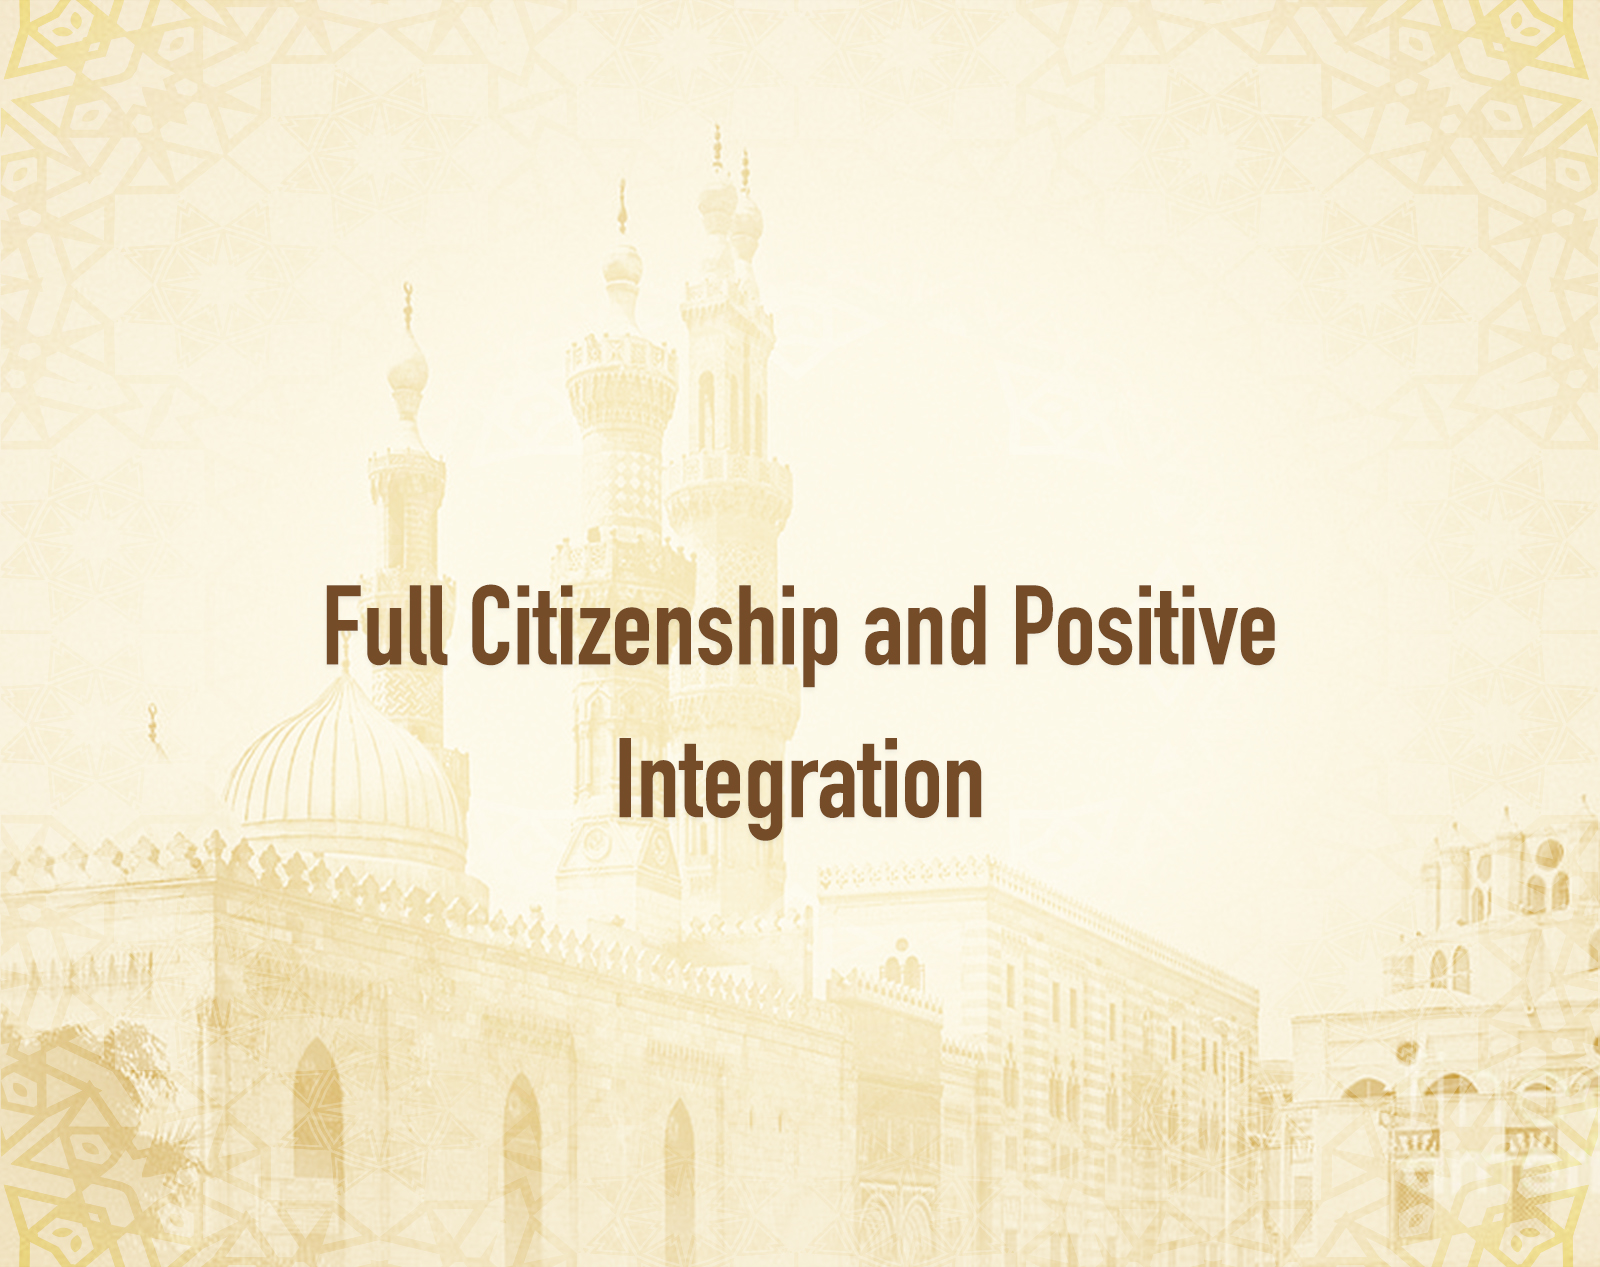 Full Citizenship and Positive Integration.jpg